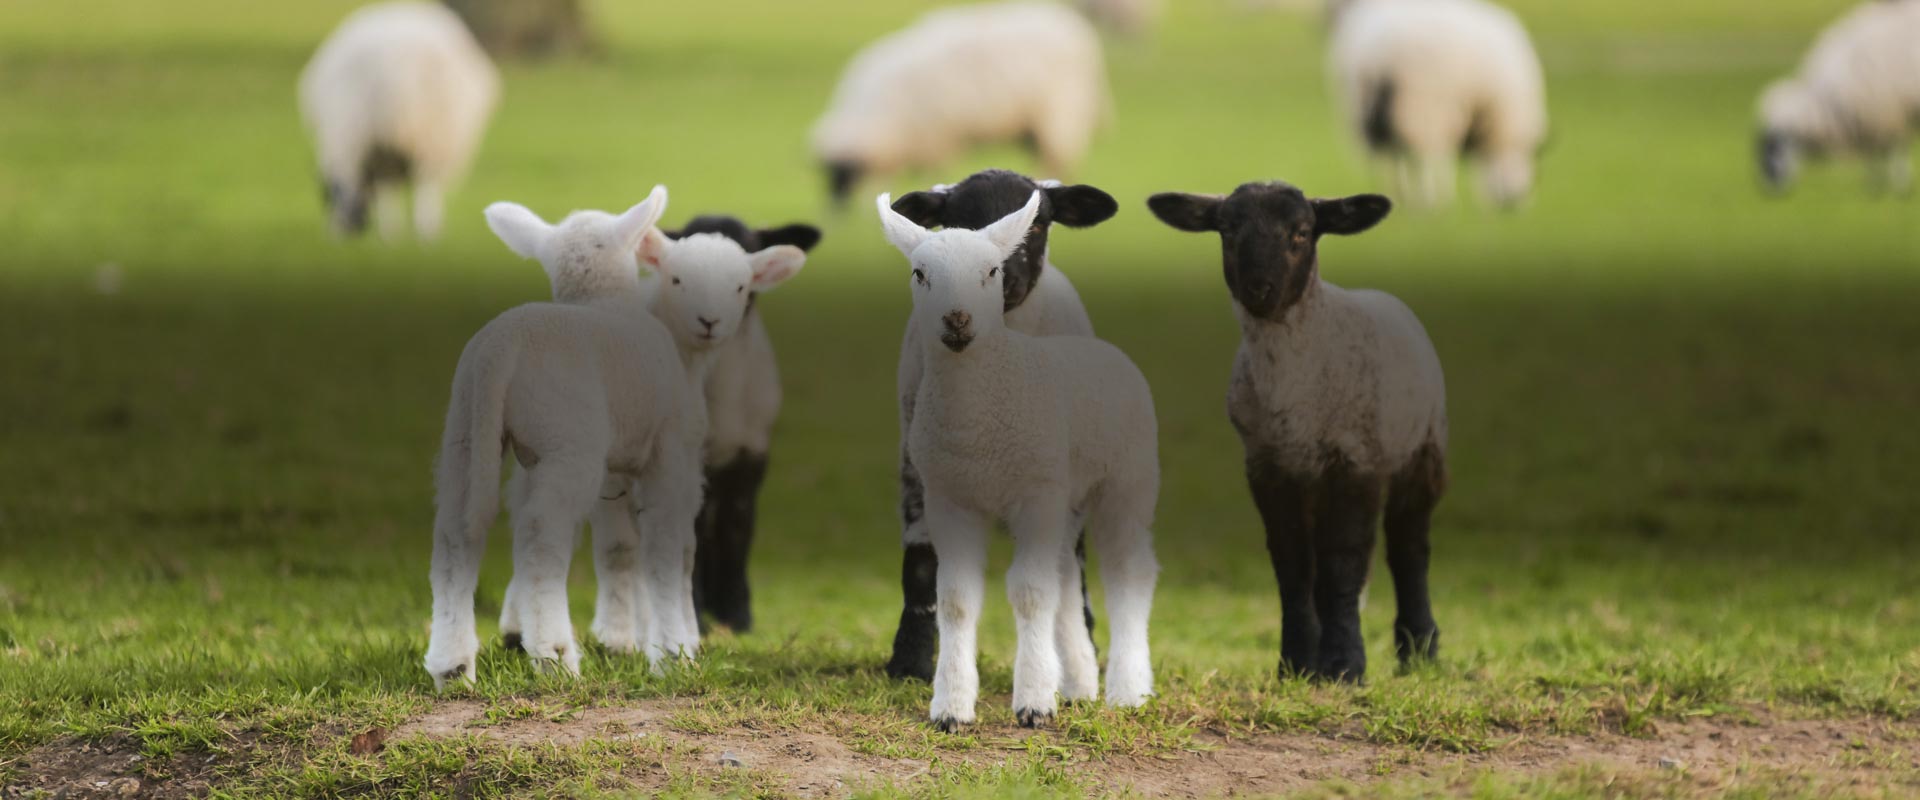 Ruminant Health & Welfare - Lambs in a field